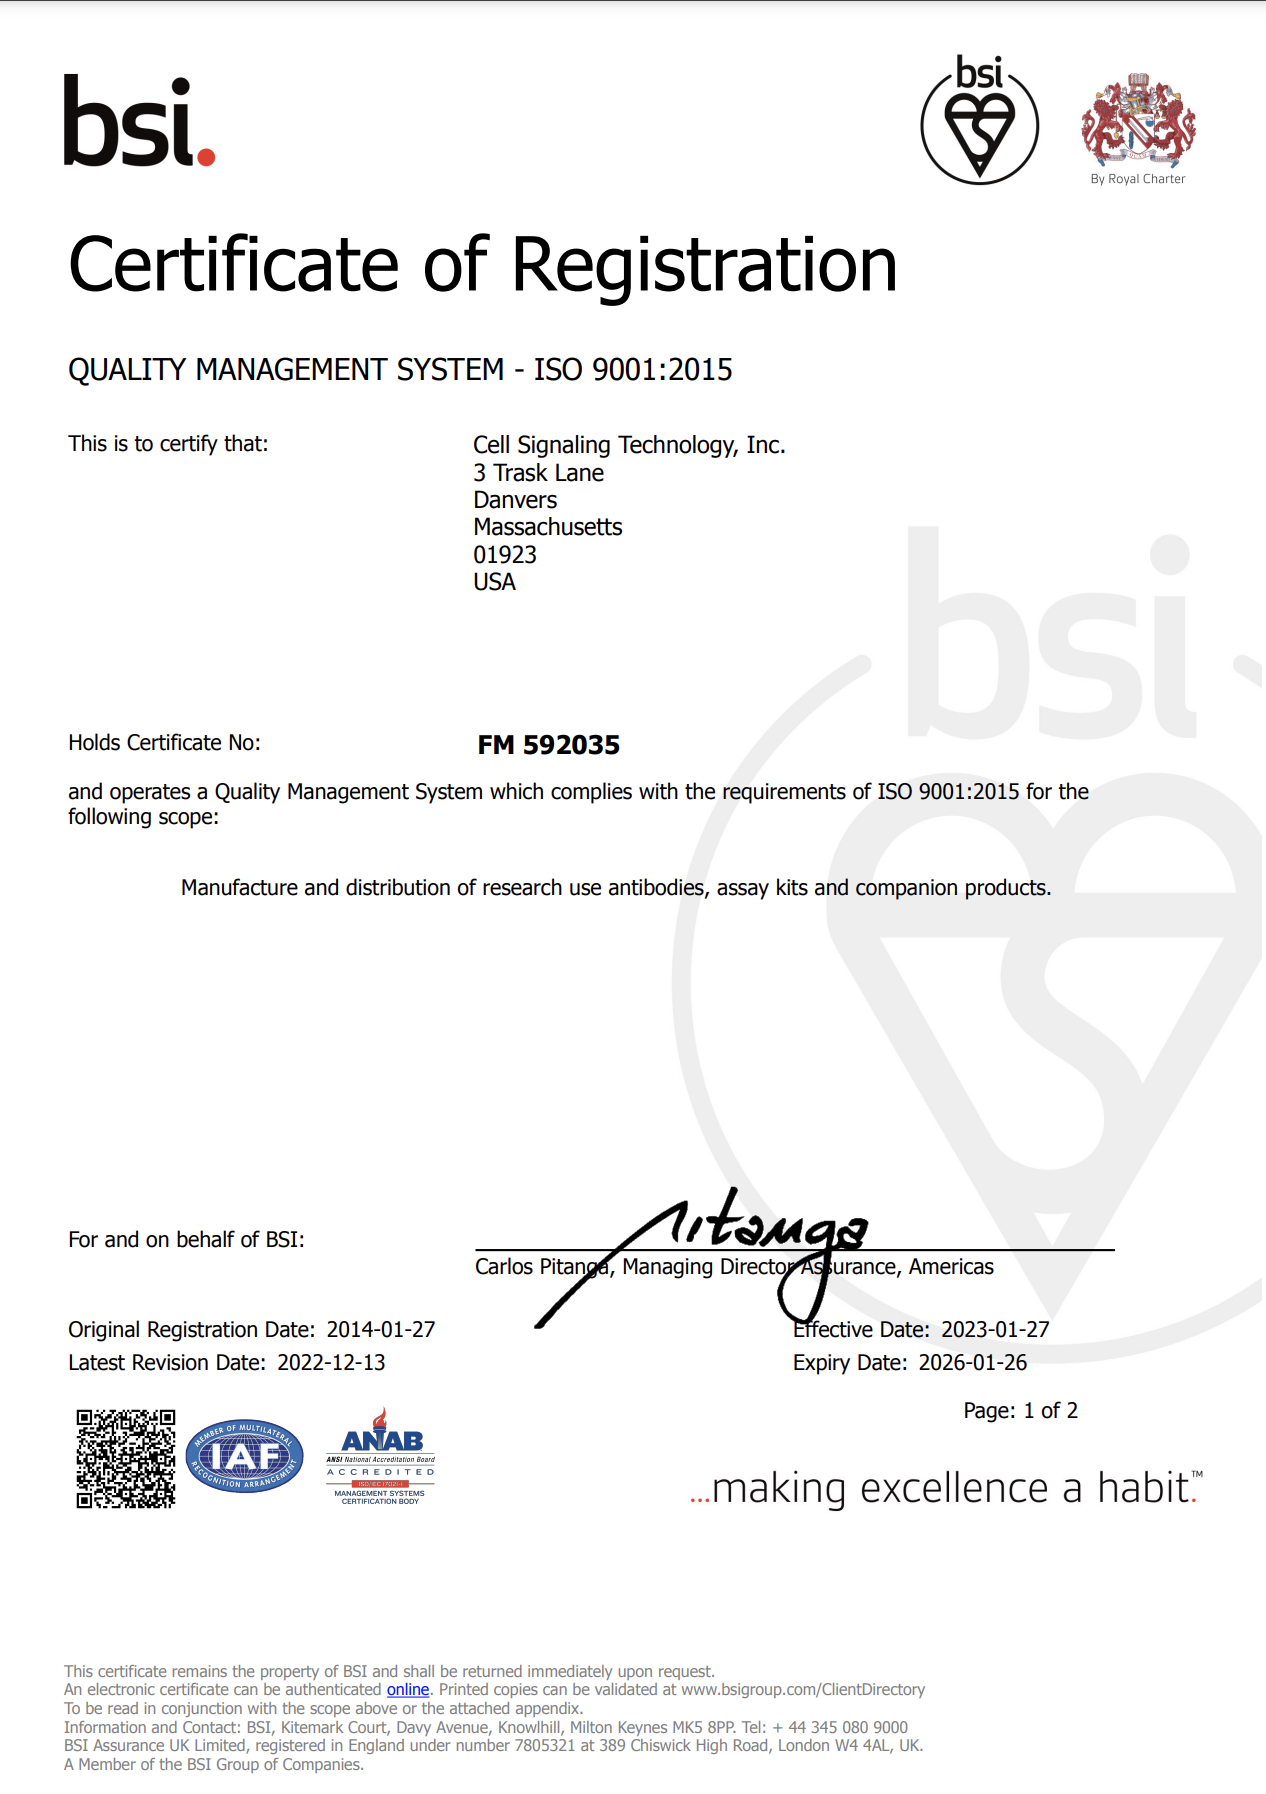 ISO 认证